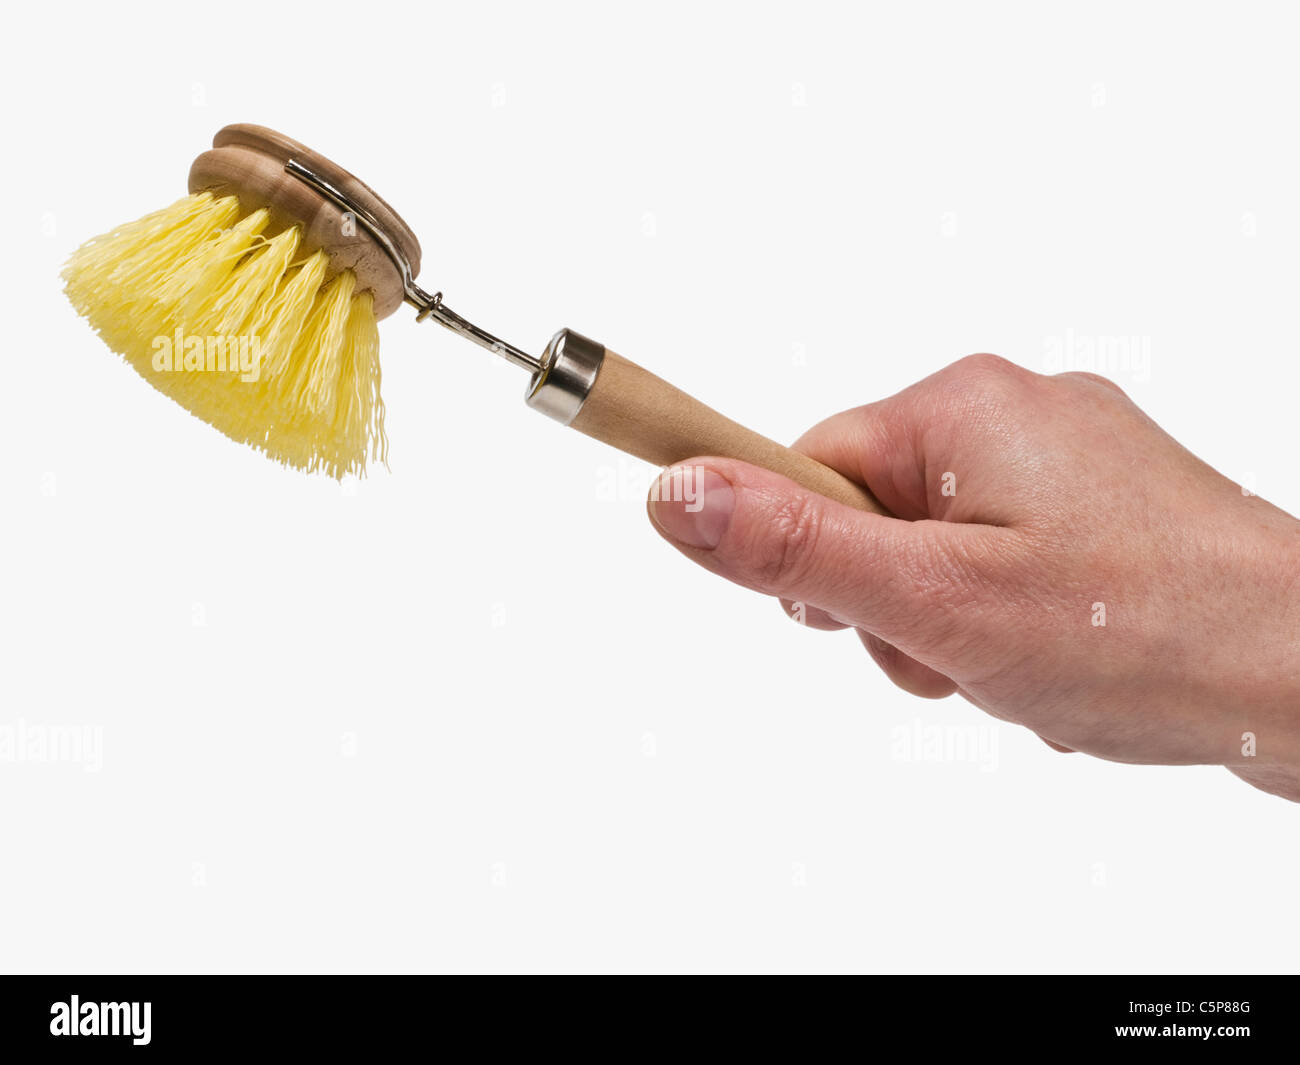 Eine Haushaltsspülbürste wird in der gehalten mano | una spazzola per lavare i piatti è di tenere in mano Foto Stock